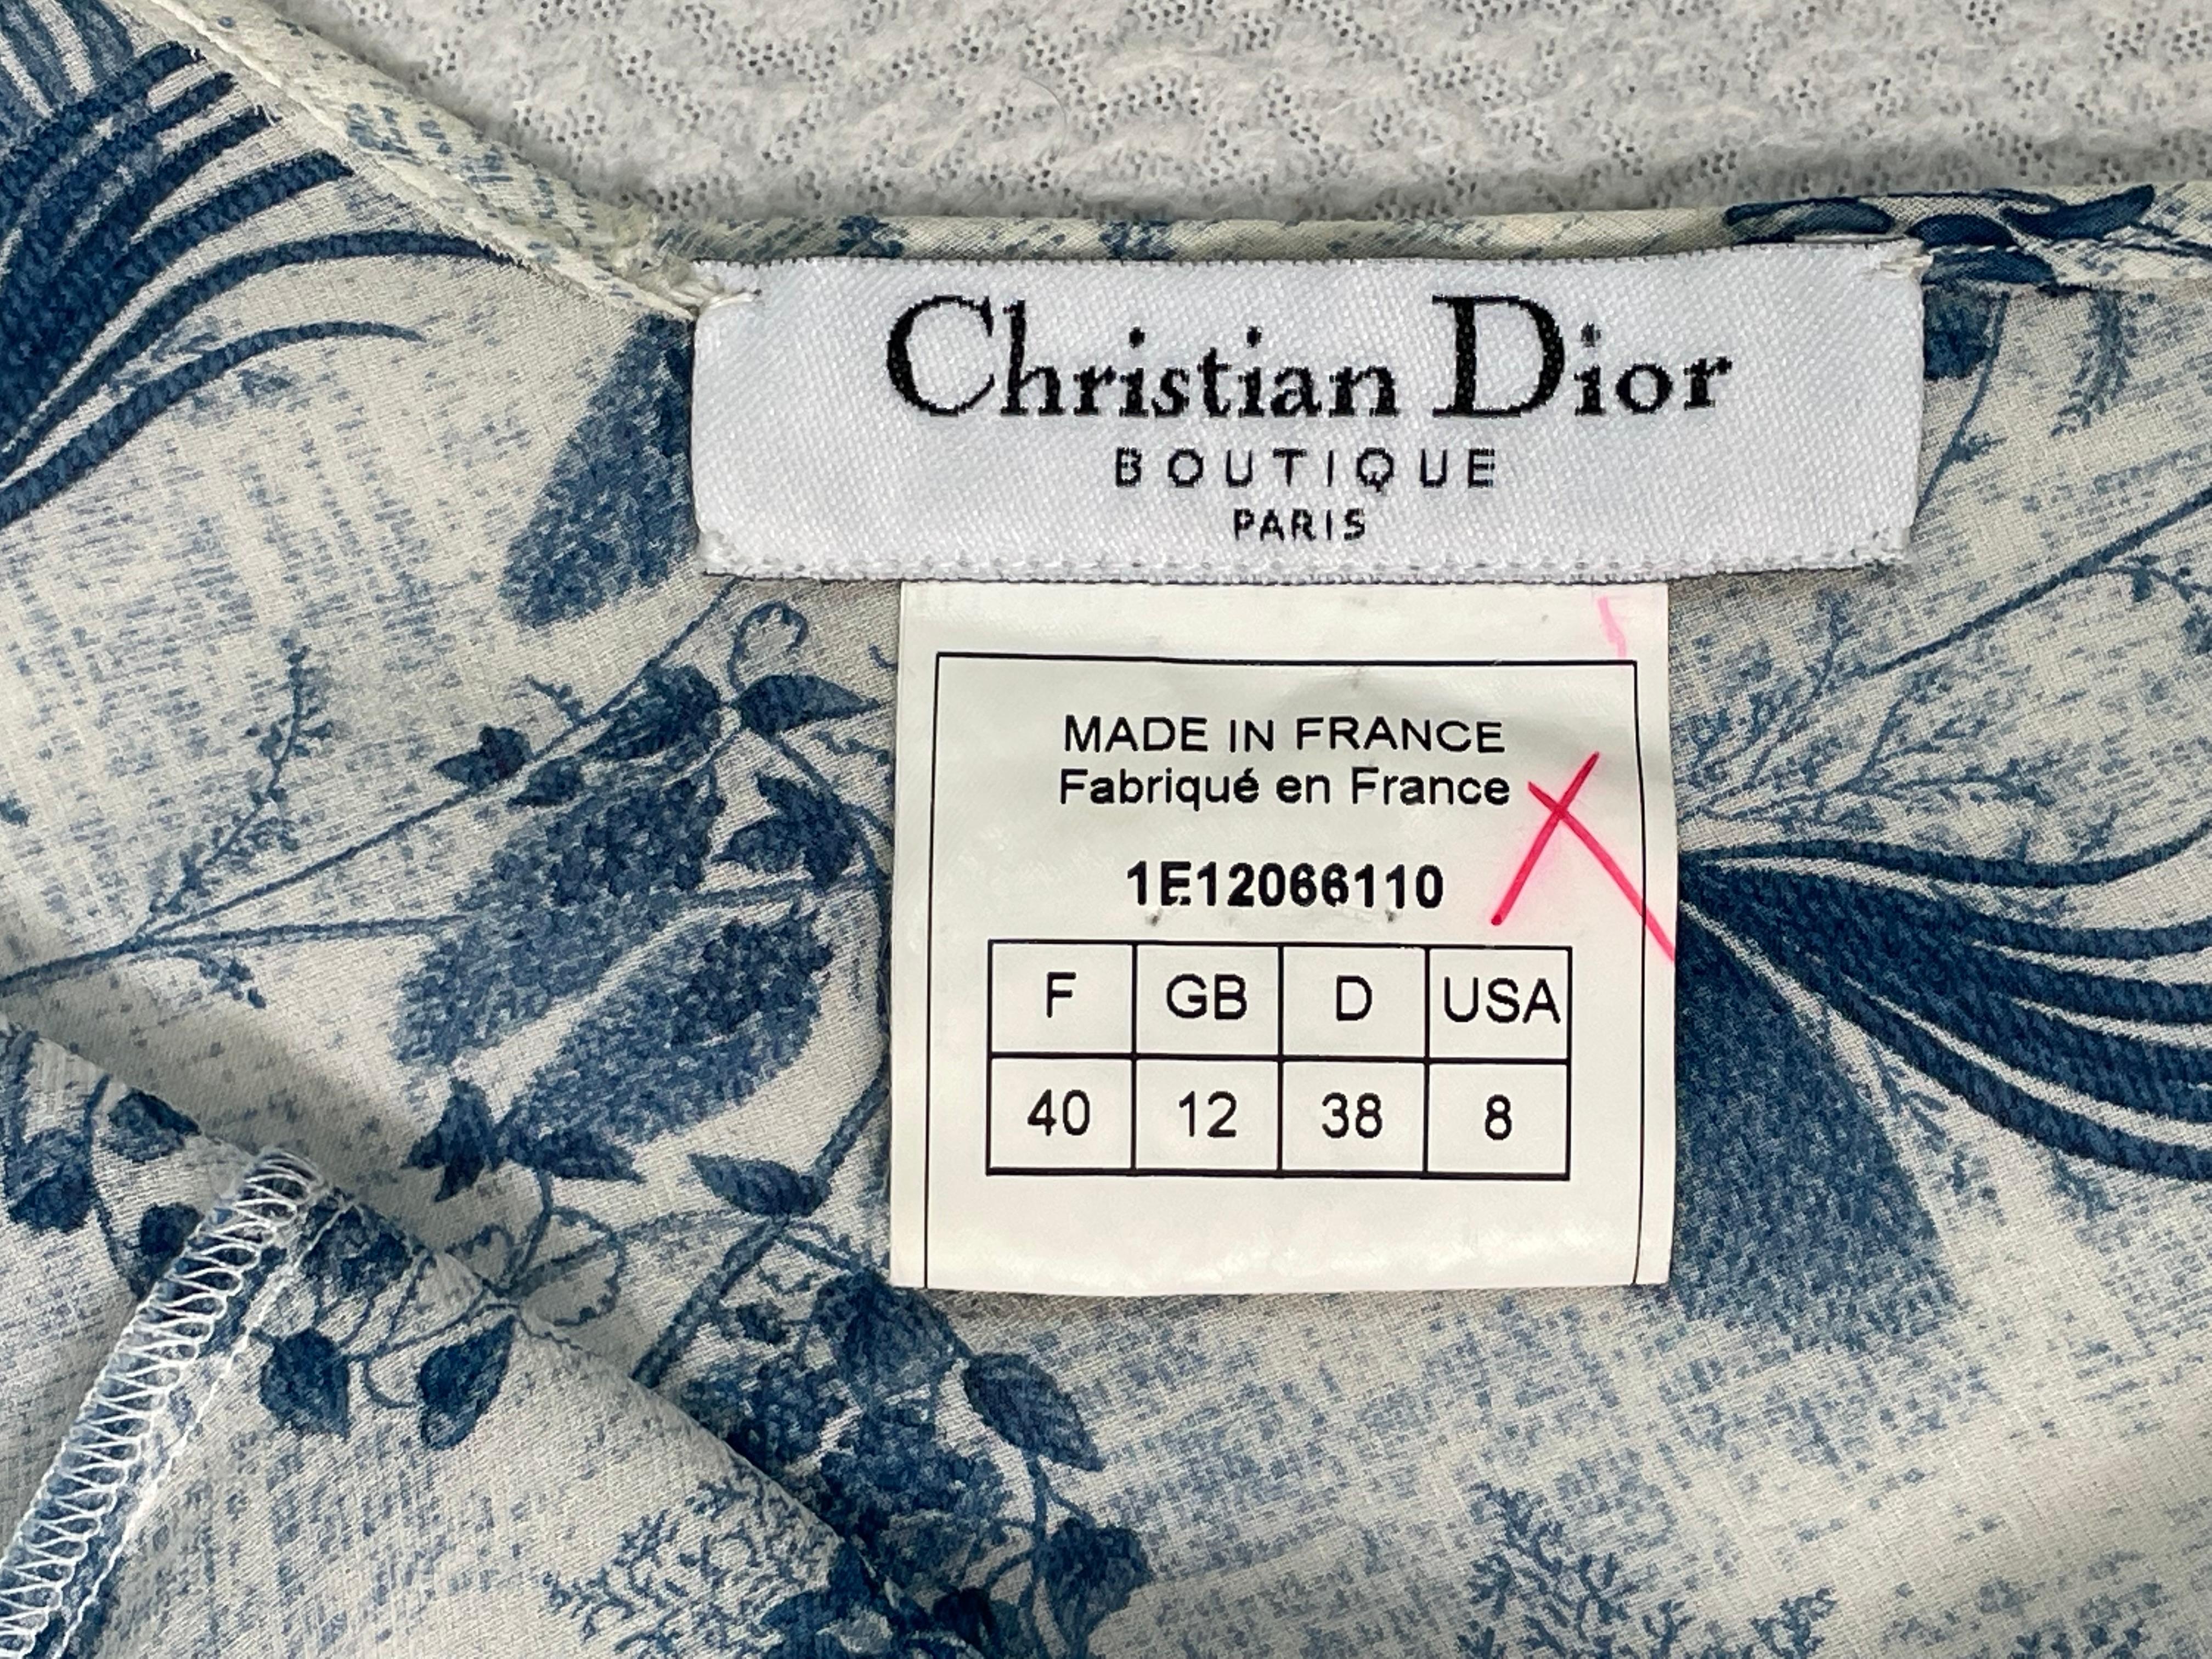 S/S 2001 Christian Dior by John Galliano Sheer Blue & White Silk Slit Maxi Dress 1